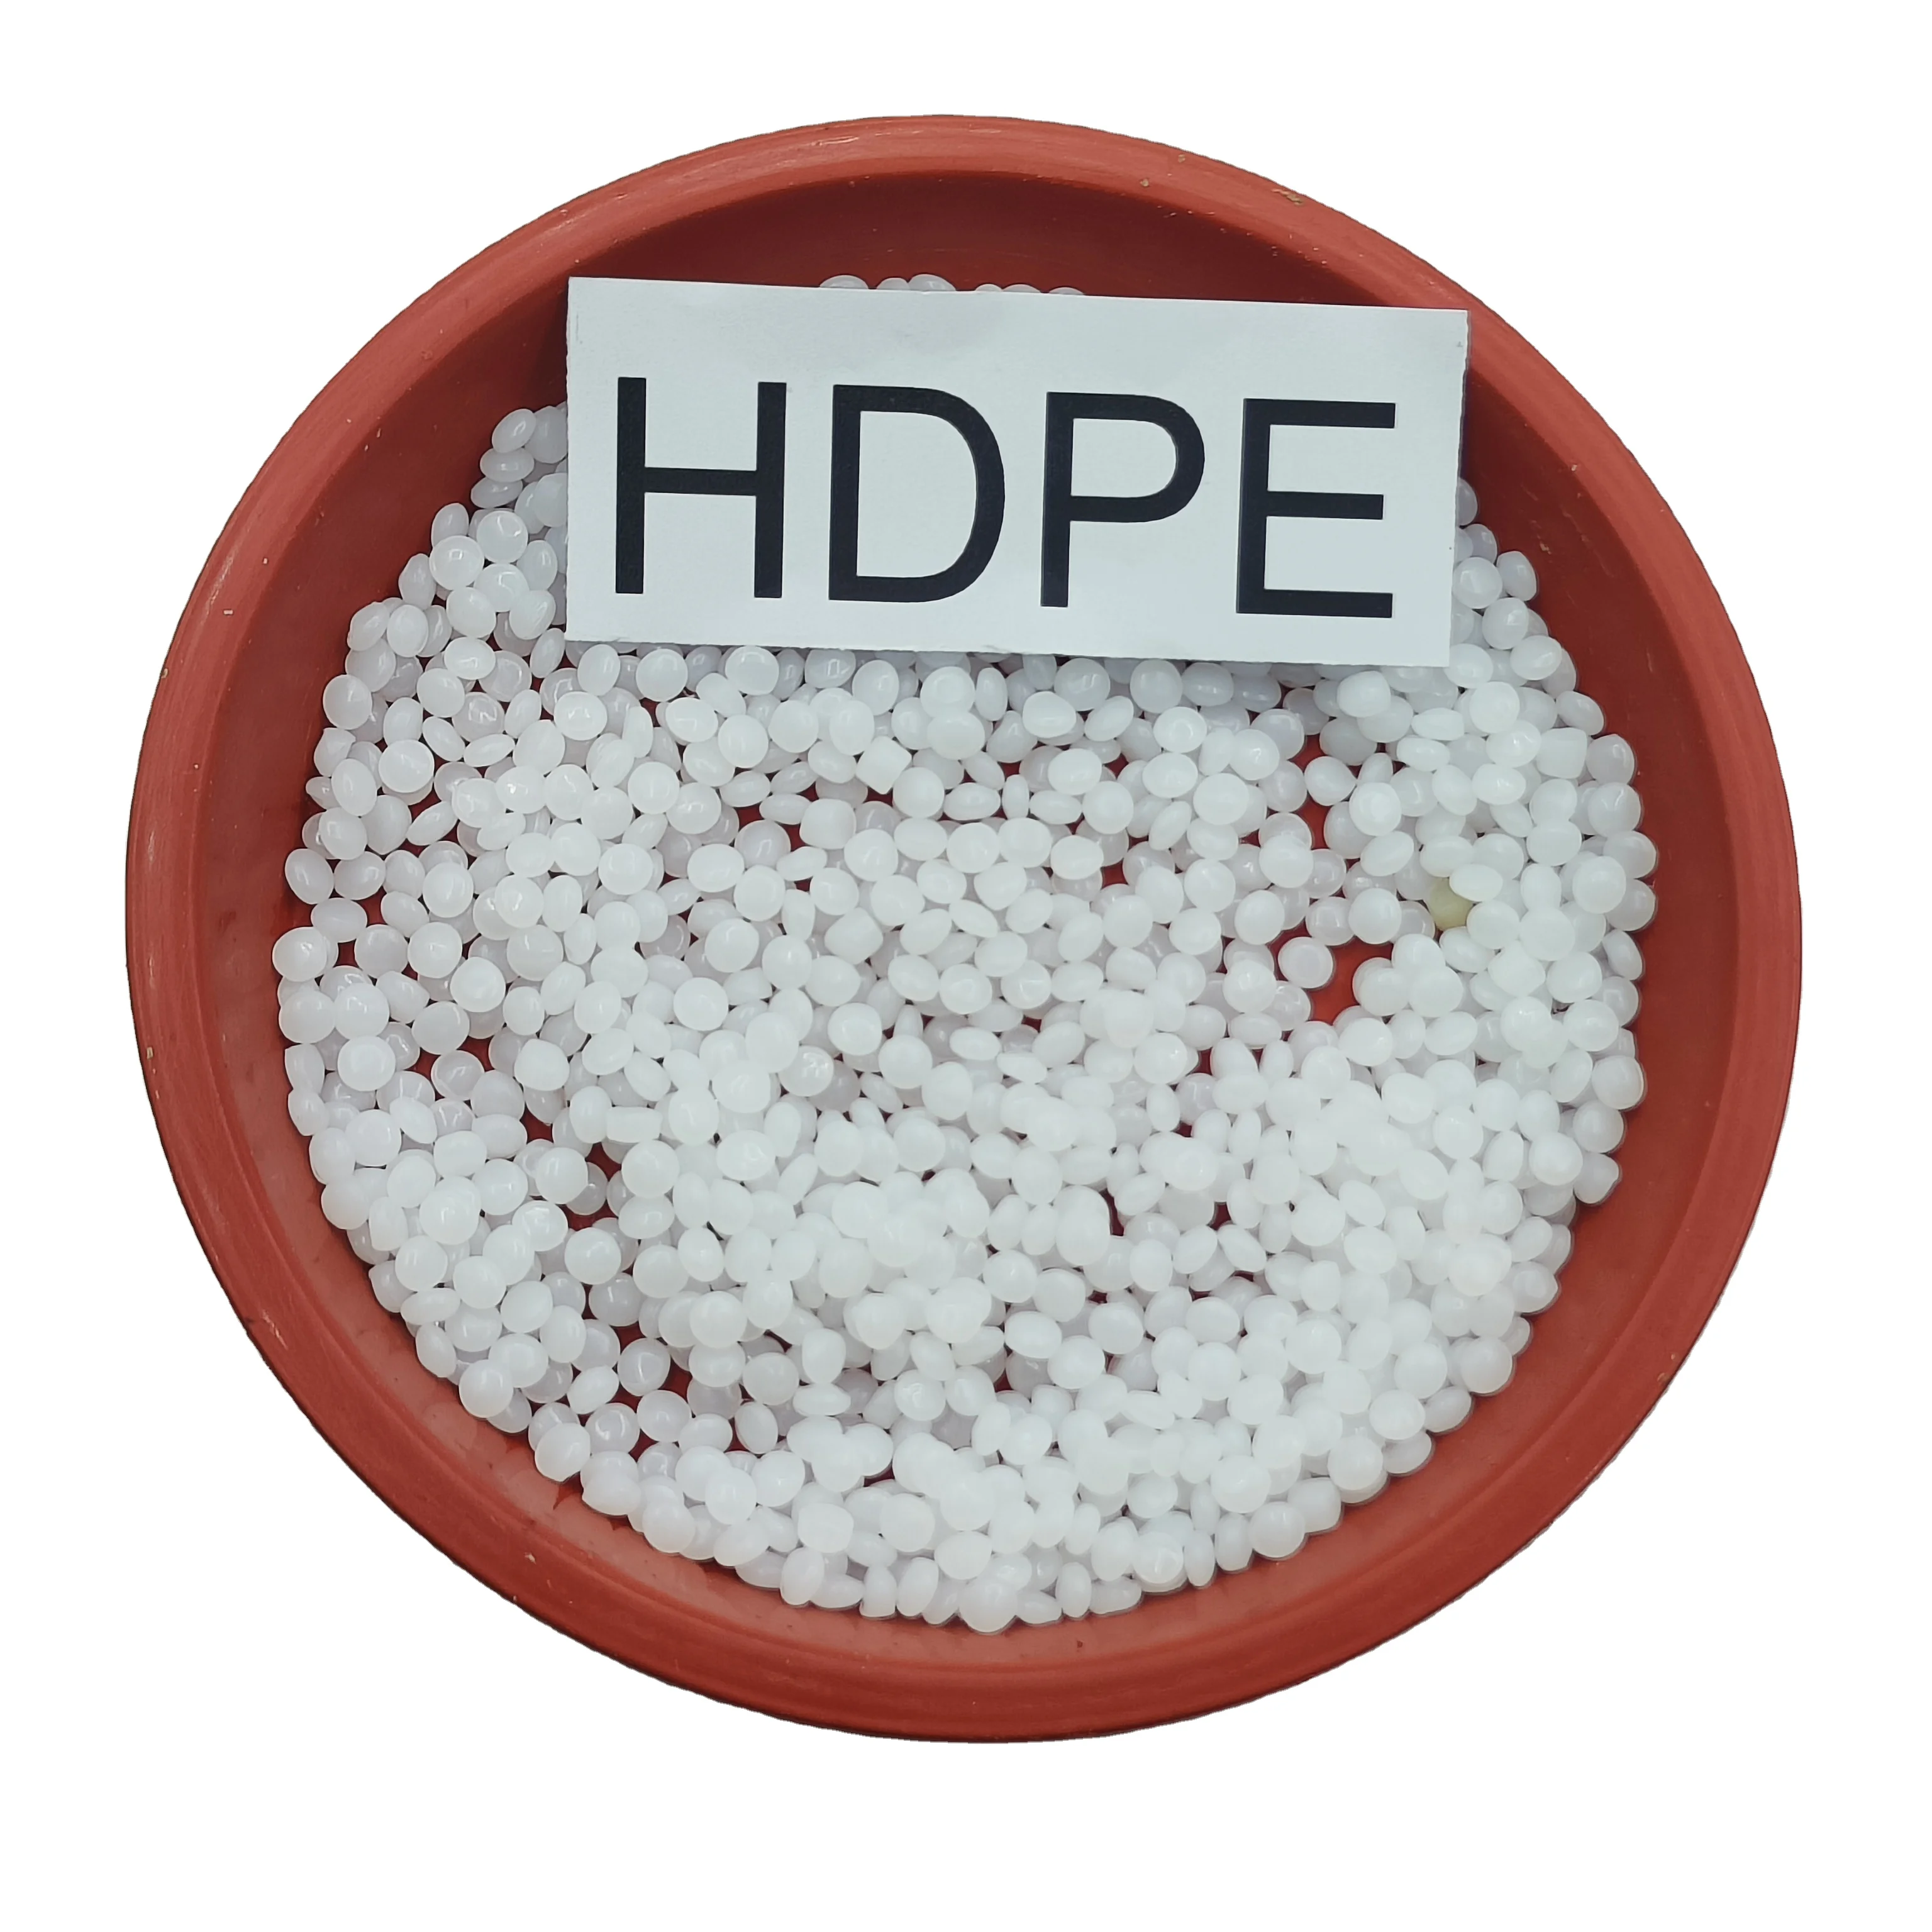 Wholesale real high quality he3364 hdpe granules hebei base pe granules hdpe virgin polyethylene